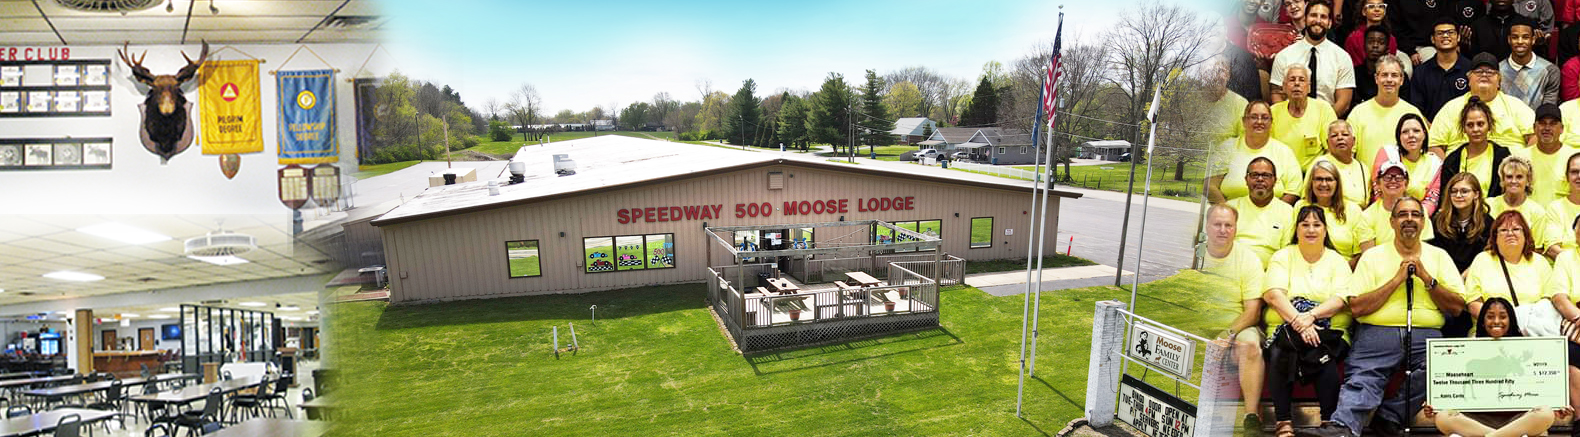 Speedway-Moose-500 Lodge Website